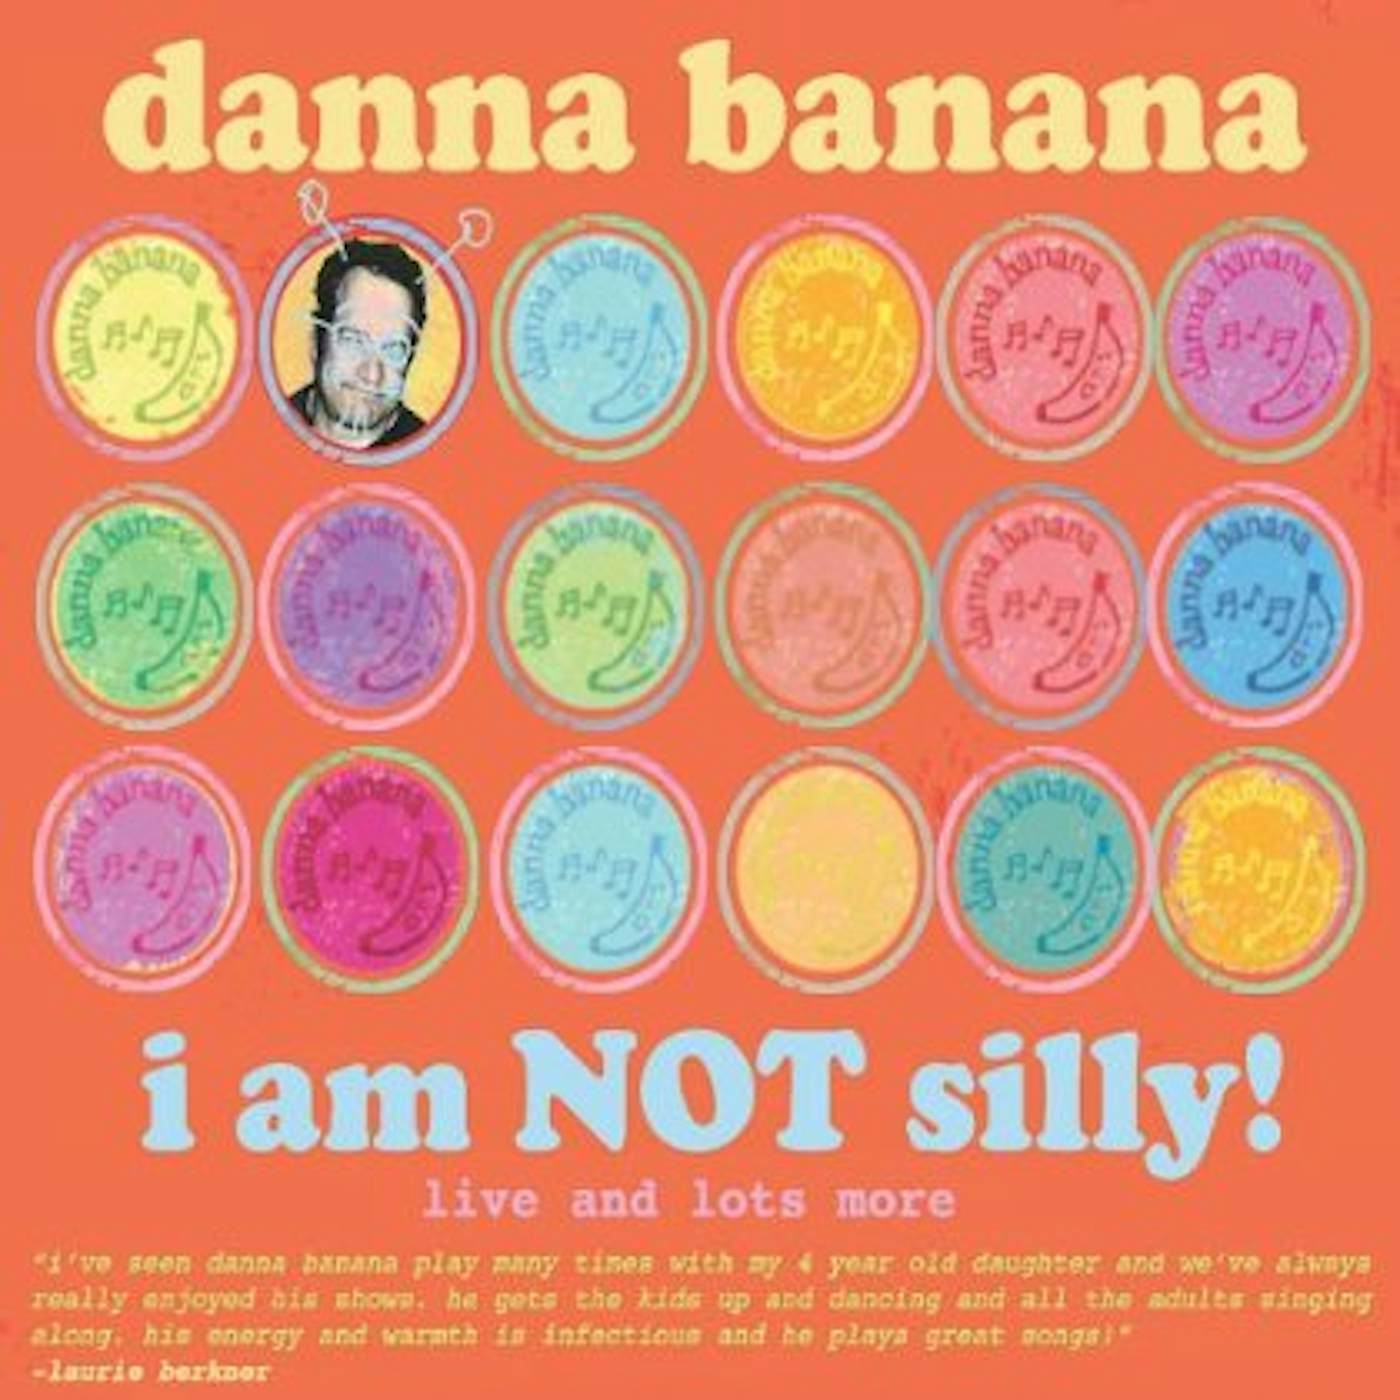 Danna Banana I AM NOT SILLY CD